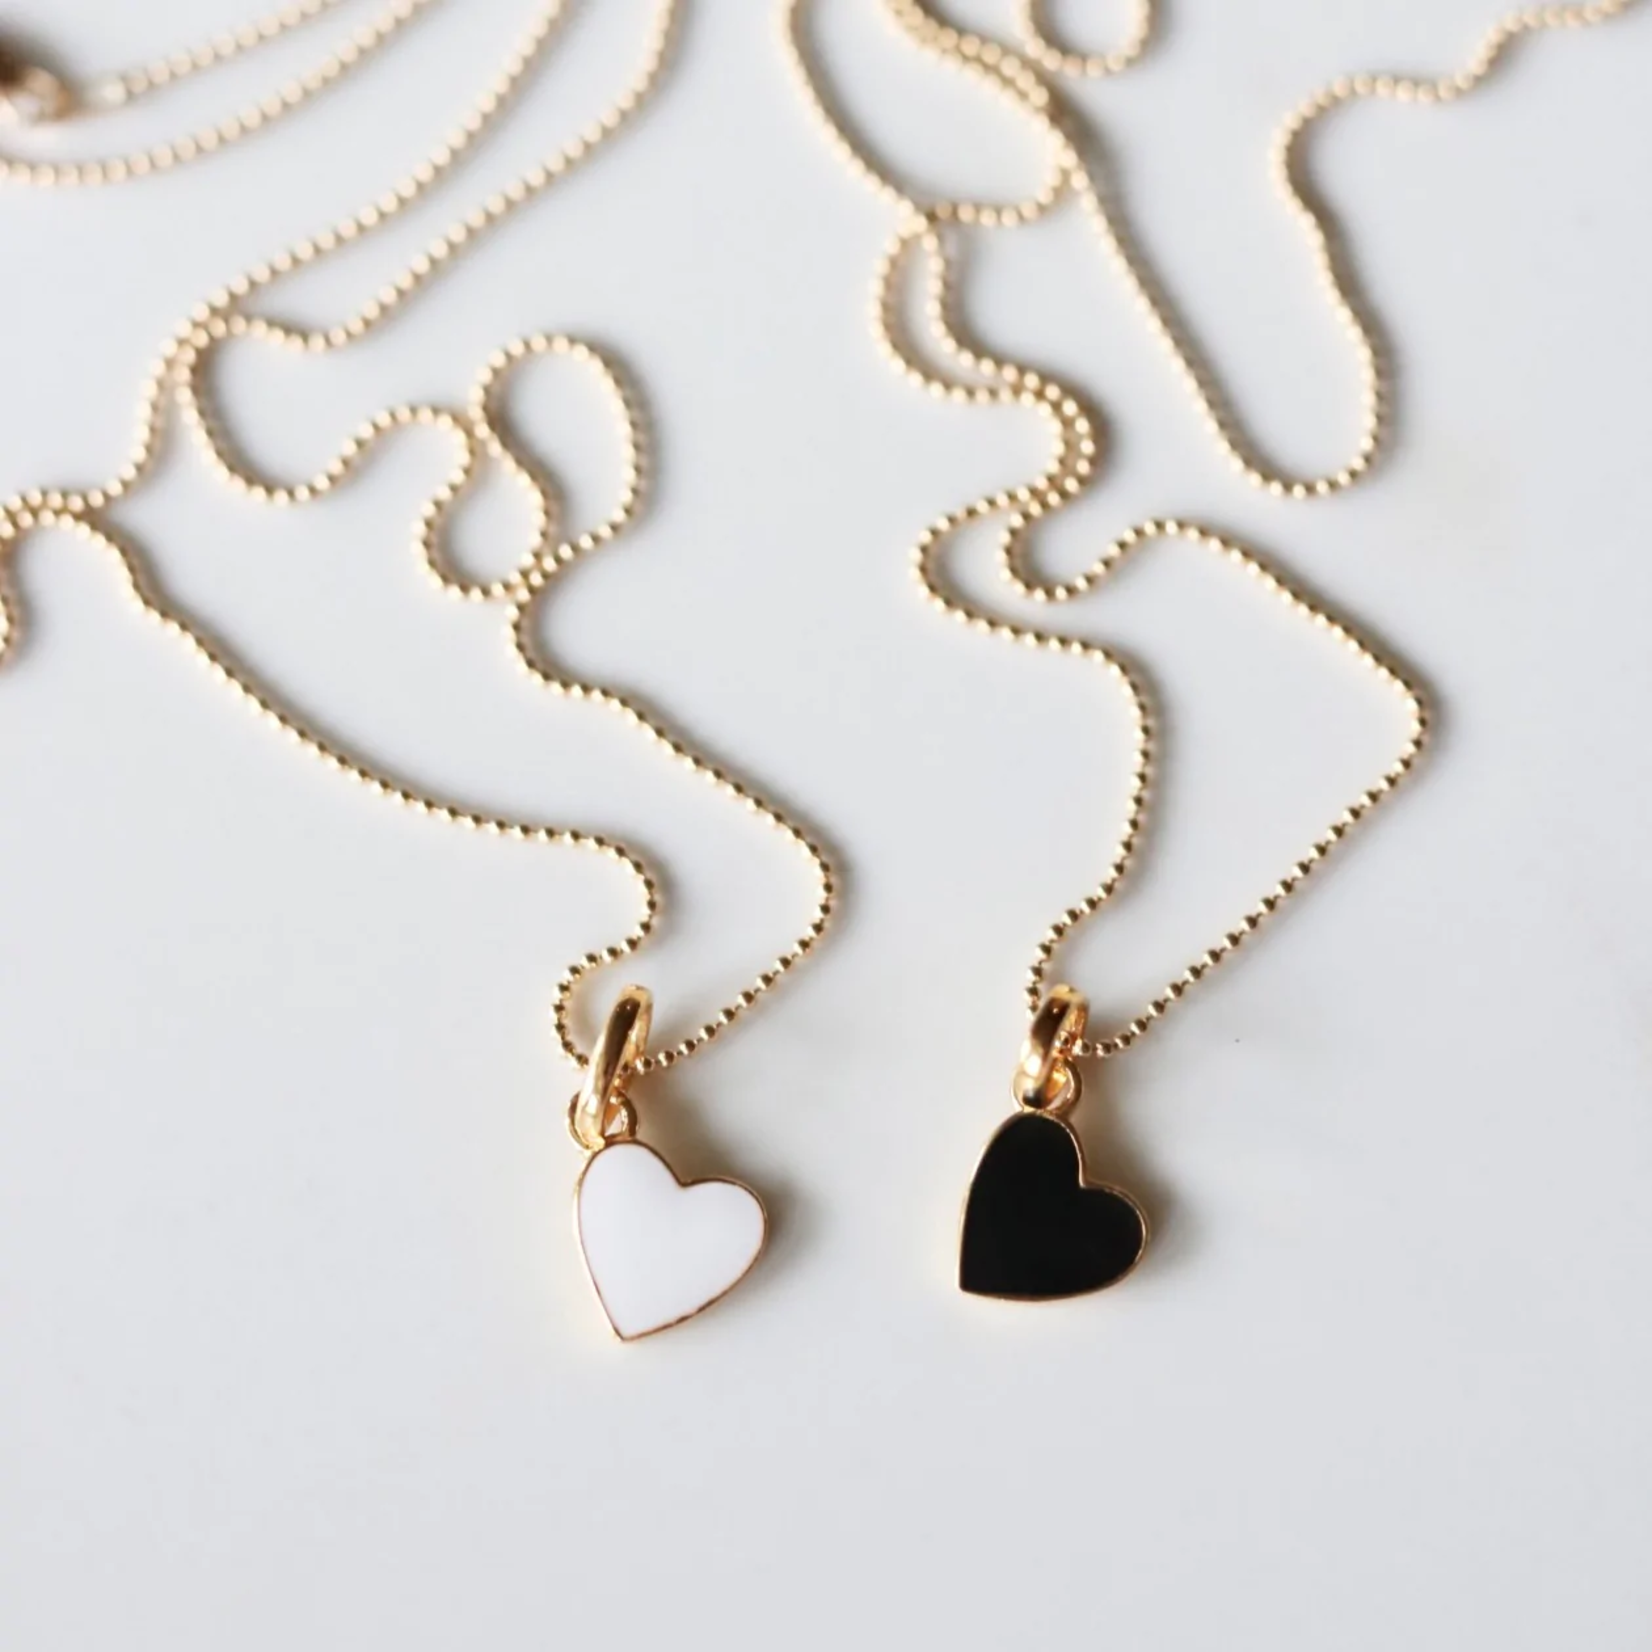 Lolo Jewellery Black Heart Necklace - 20"